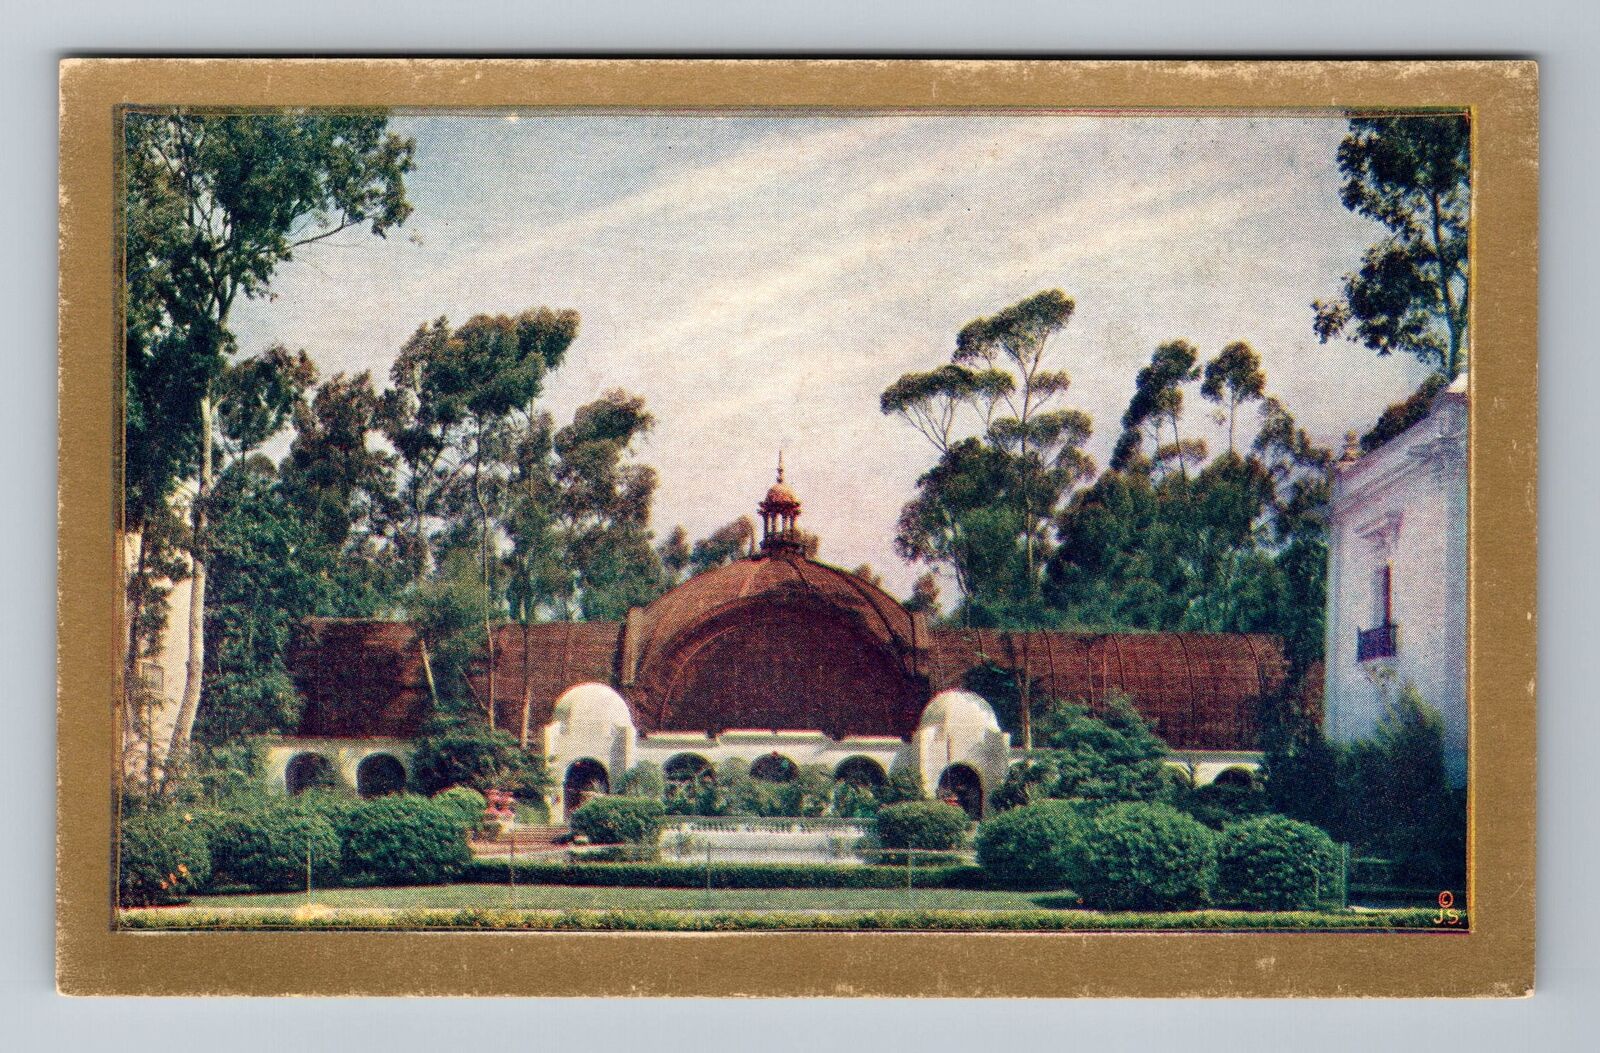 CA-California, The Botanical Building, Exterior, Vintage Postcard